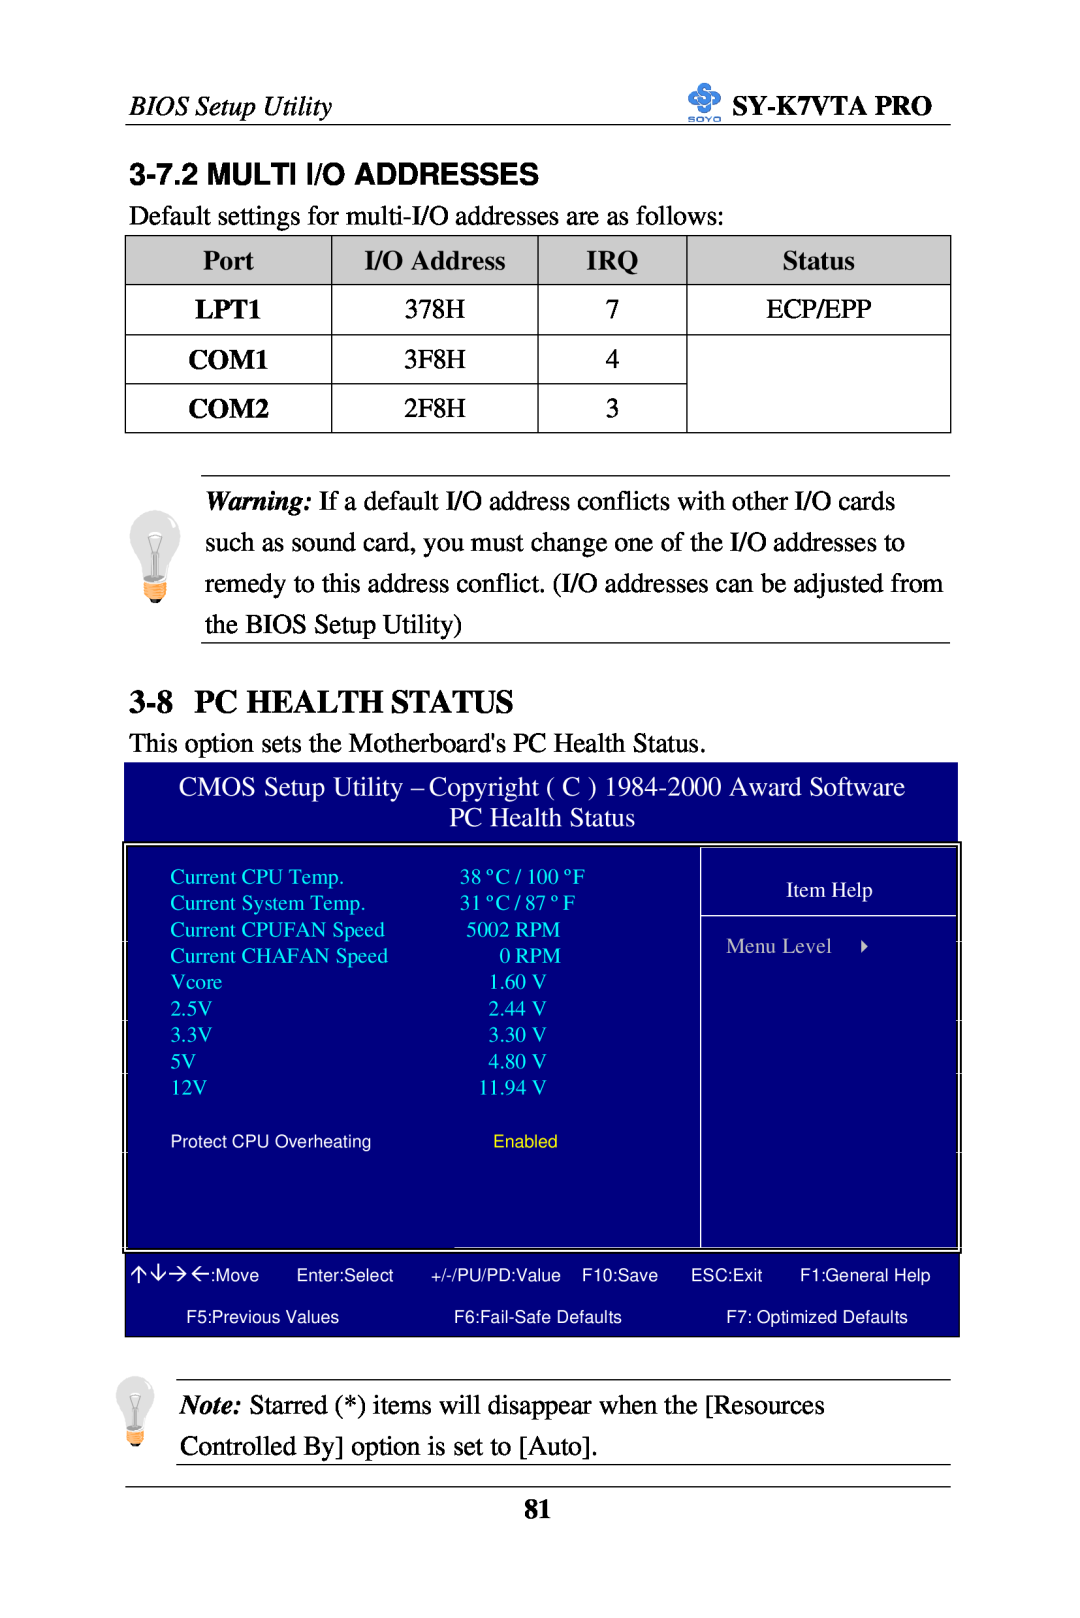 SOYO SY-K7VTA PRO user manual Pc Health Status, Multi I/O Addresses, PC Health Status, BIOS Setup Utility 